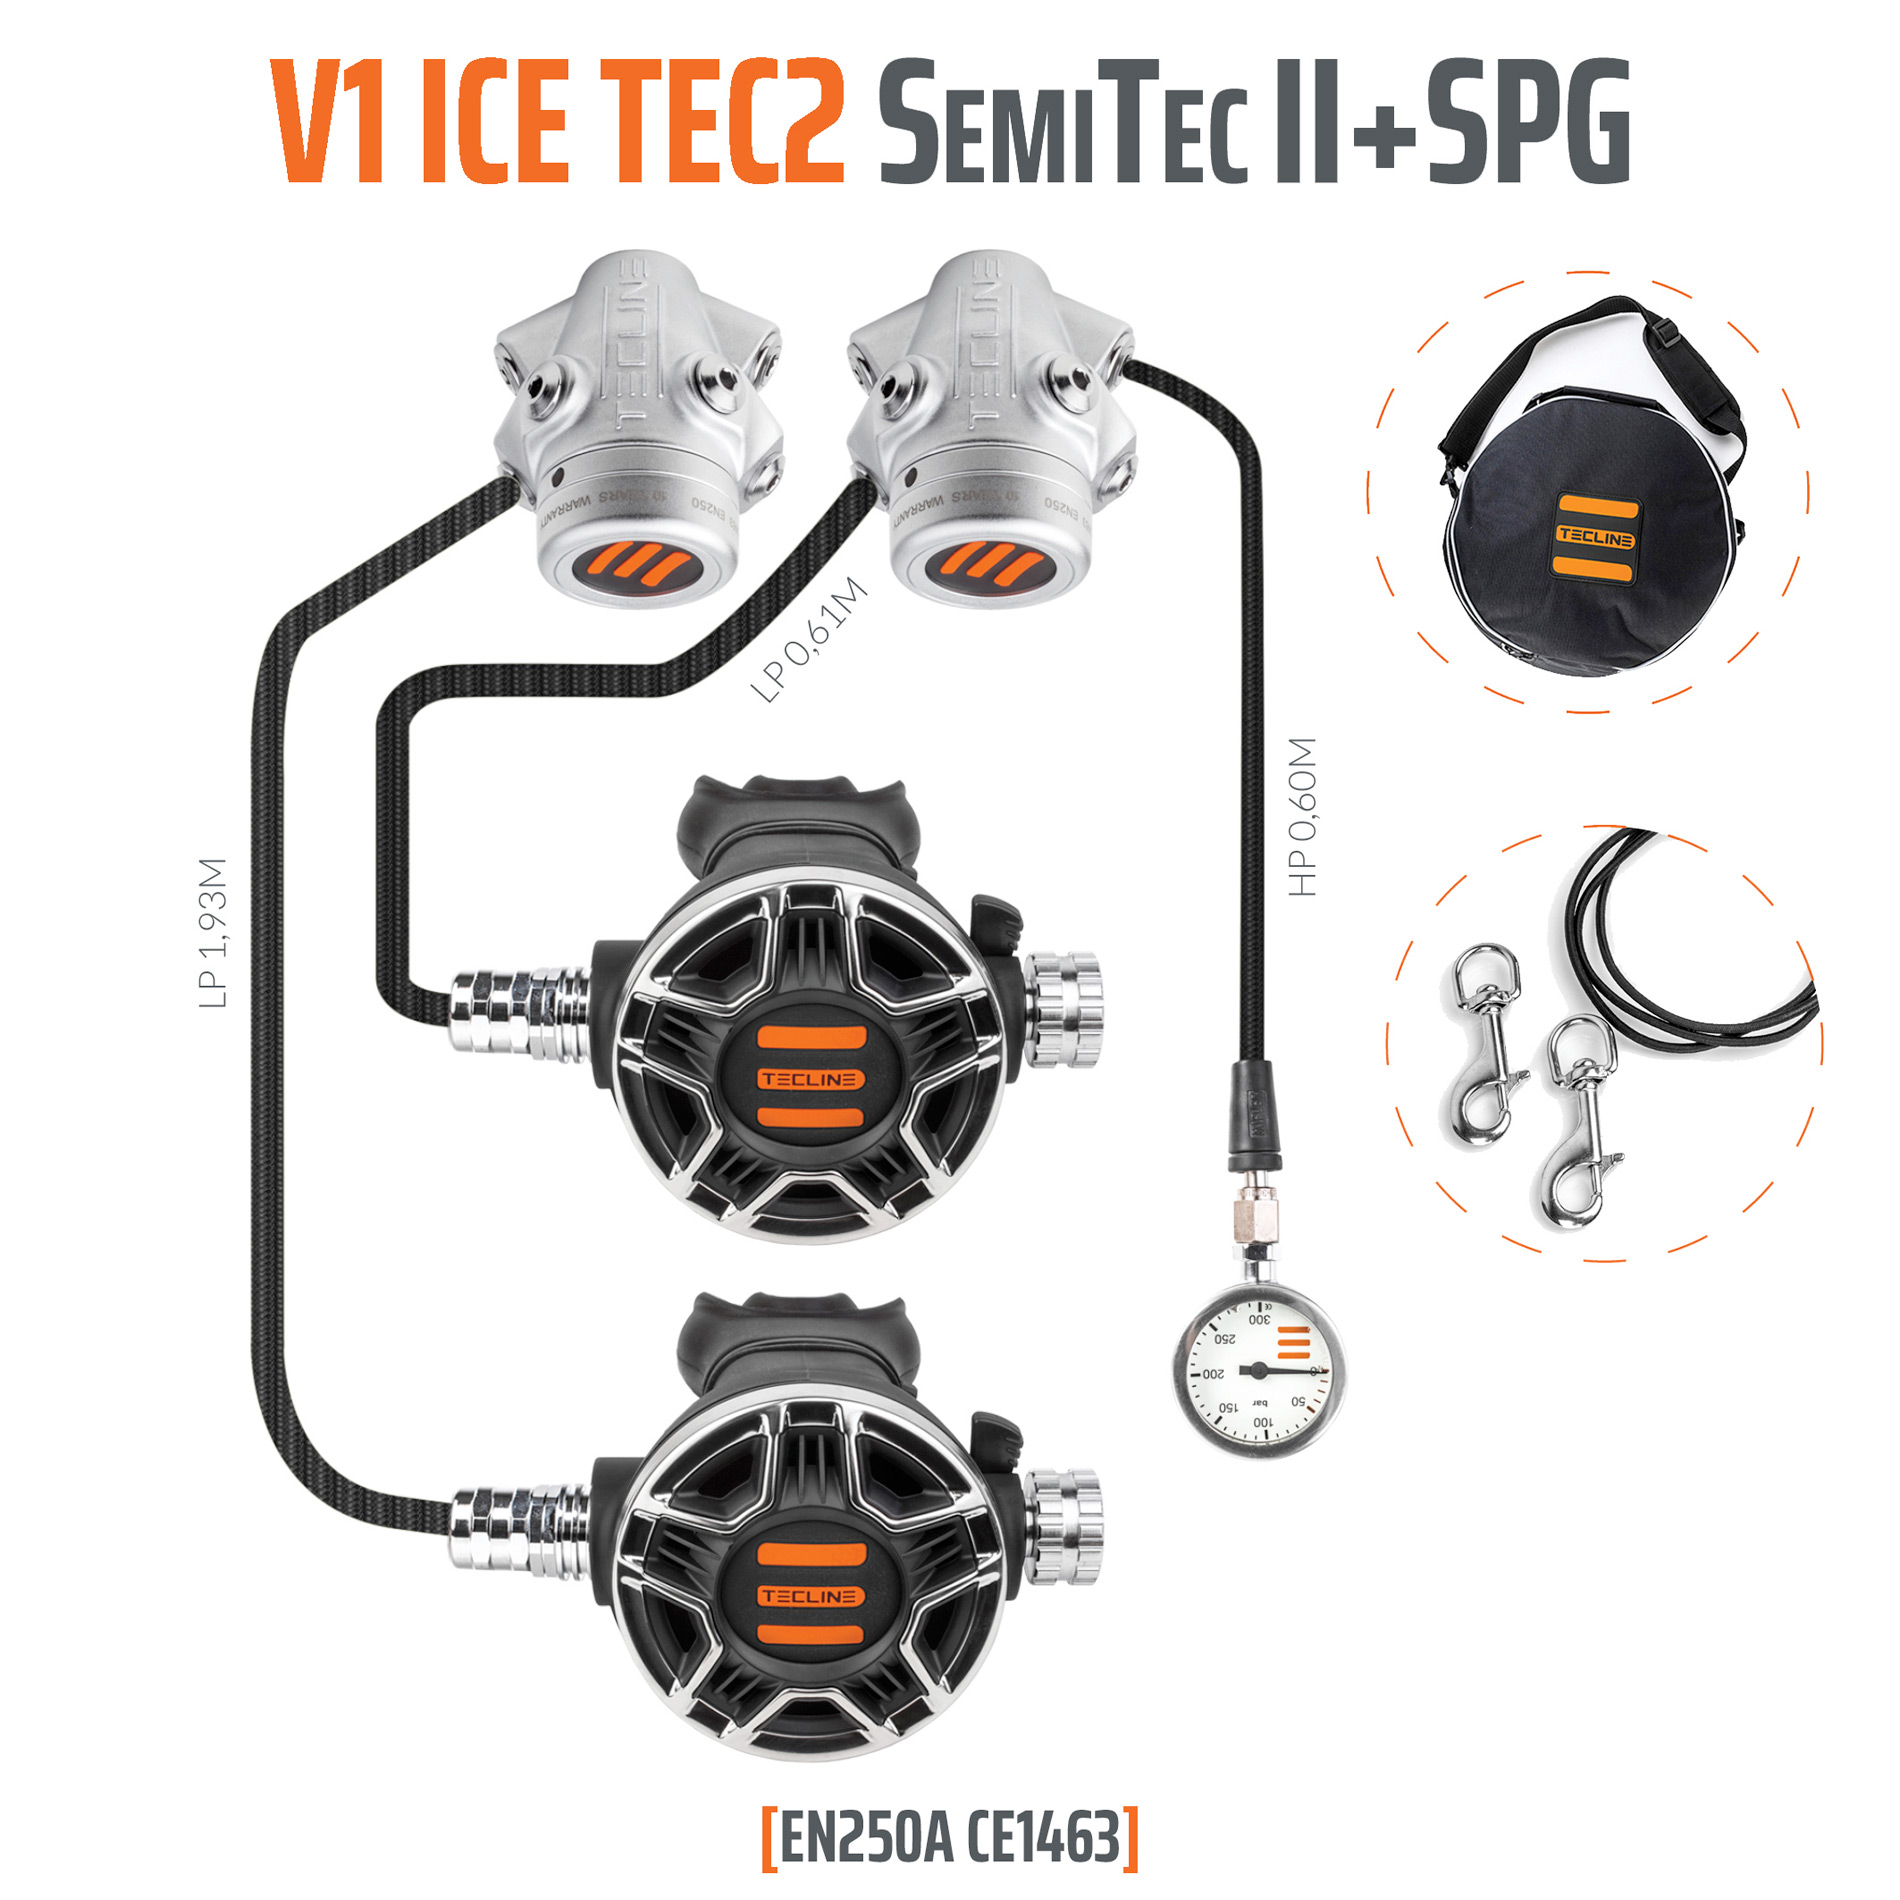 Tecline Regulator V1 ICE TEC2 SemiTec II set with SPG - EN250A